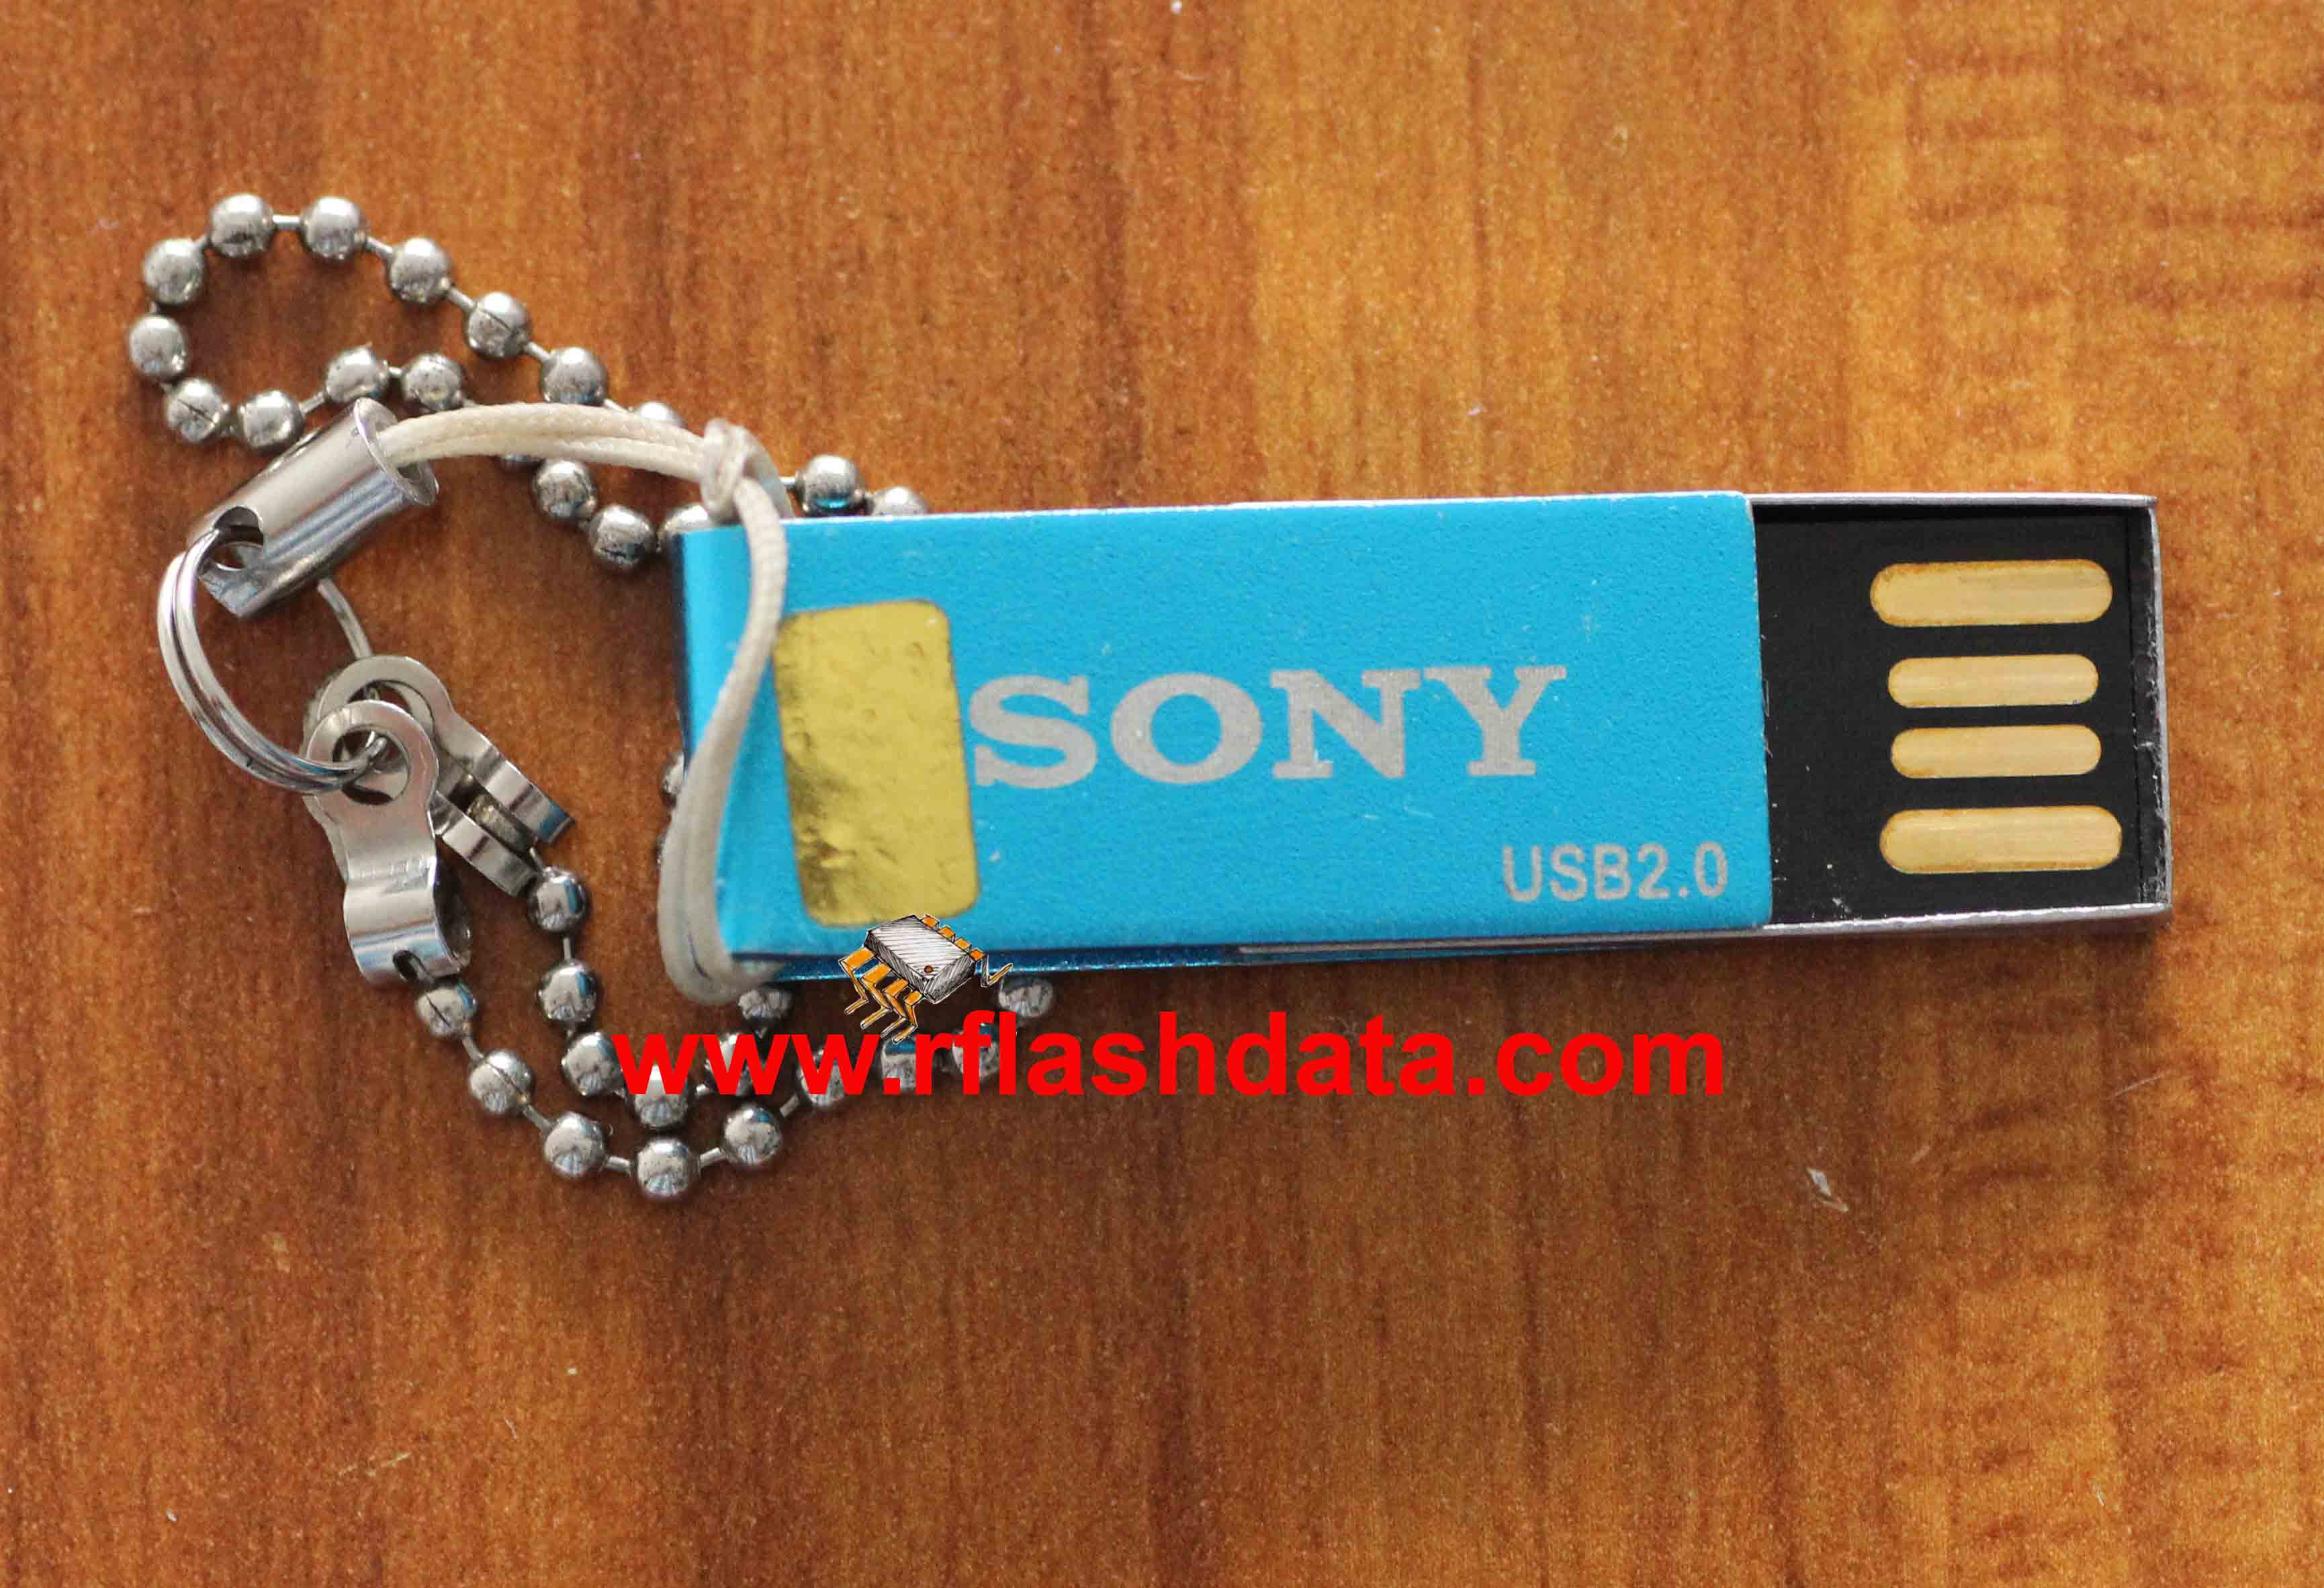 Sony flash drive